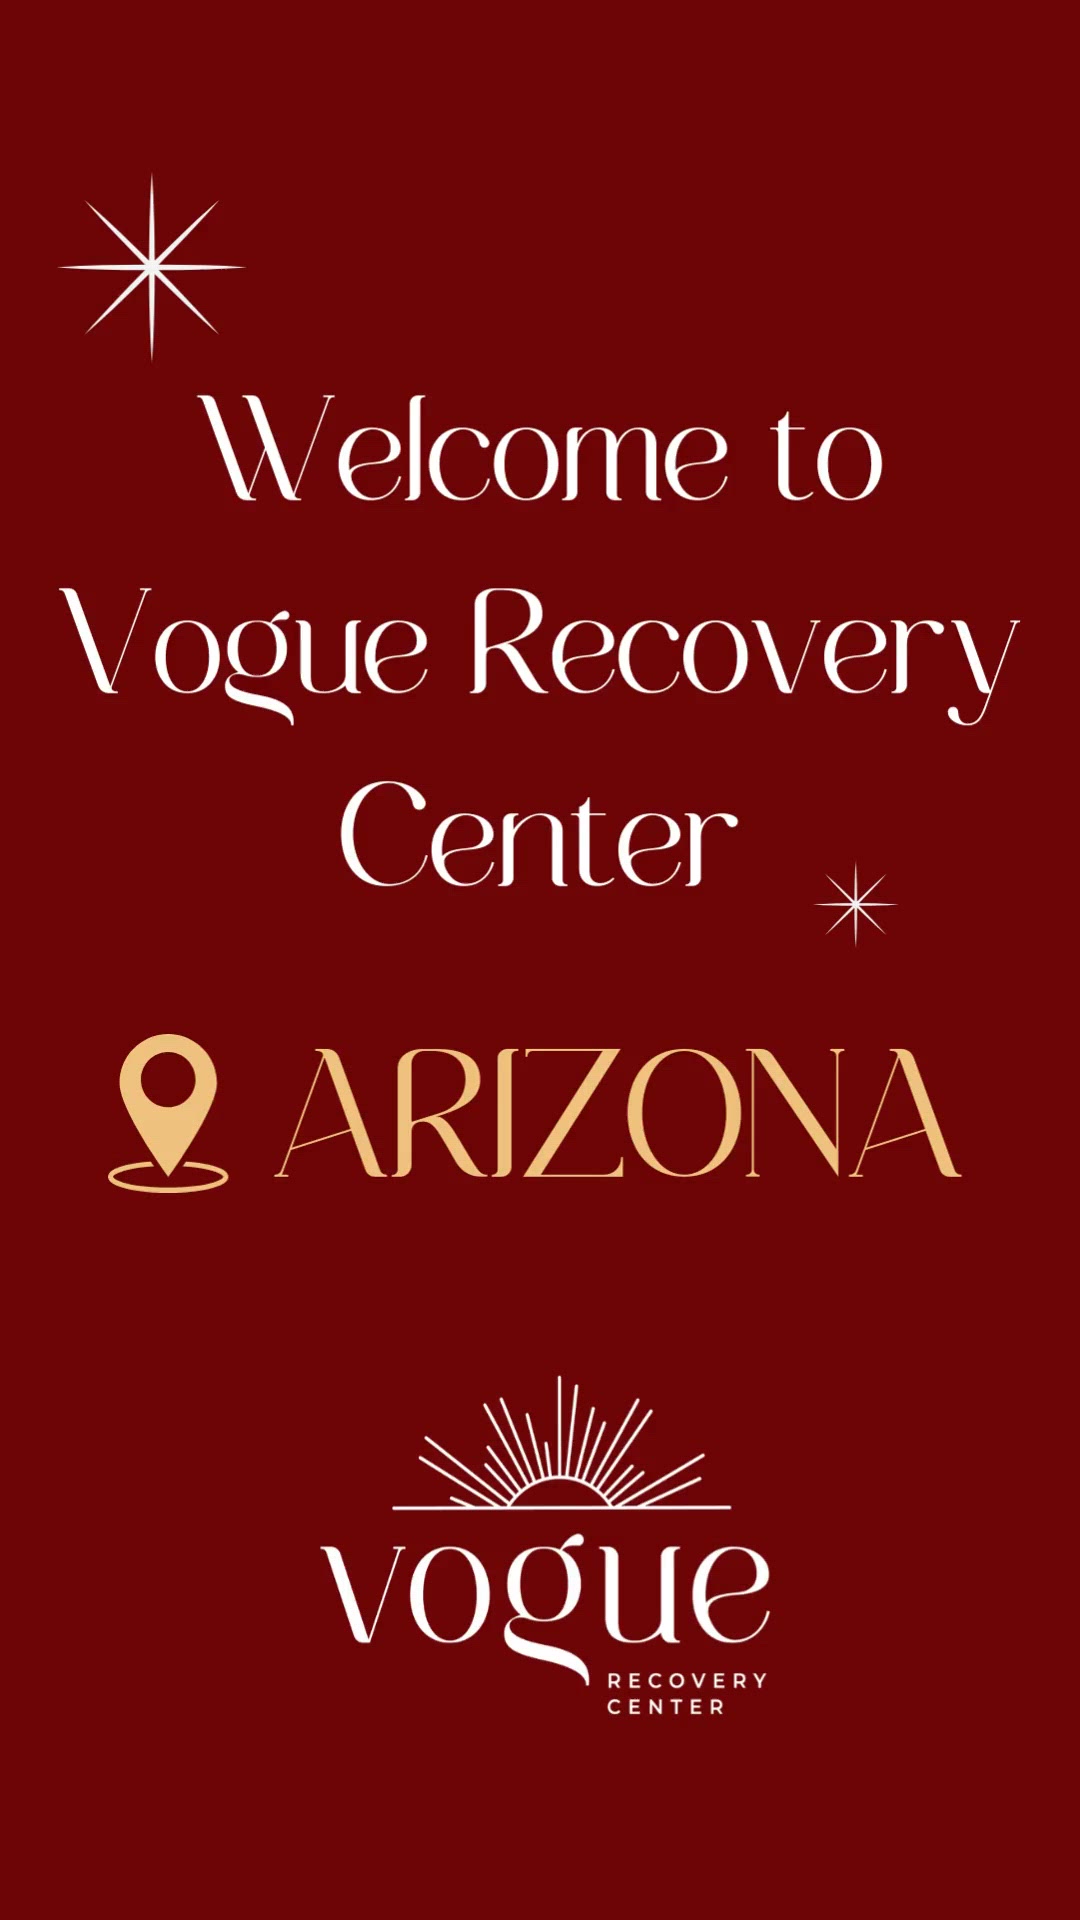 Vogue Recovery Center Arizona